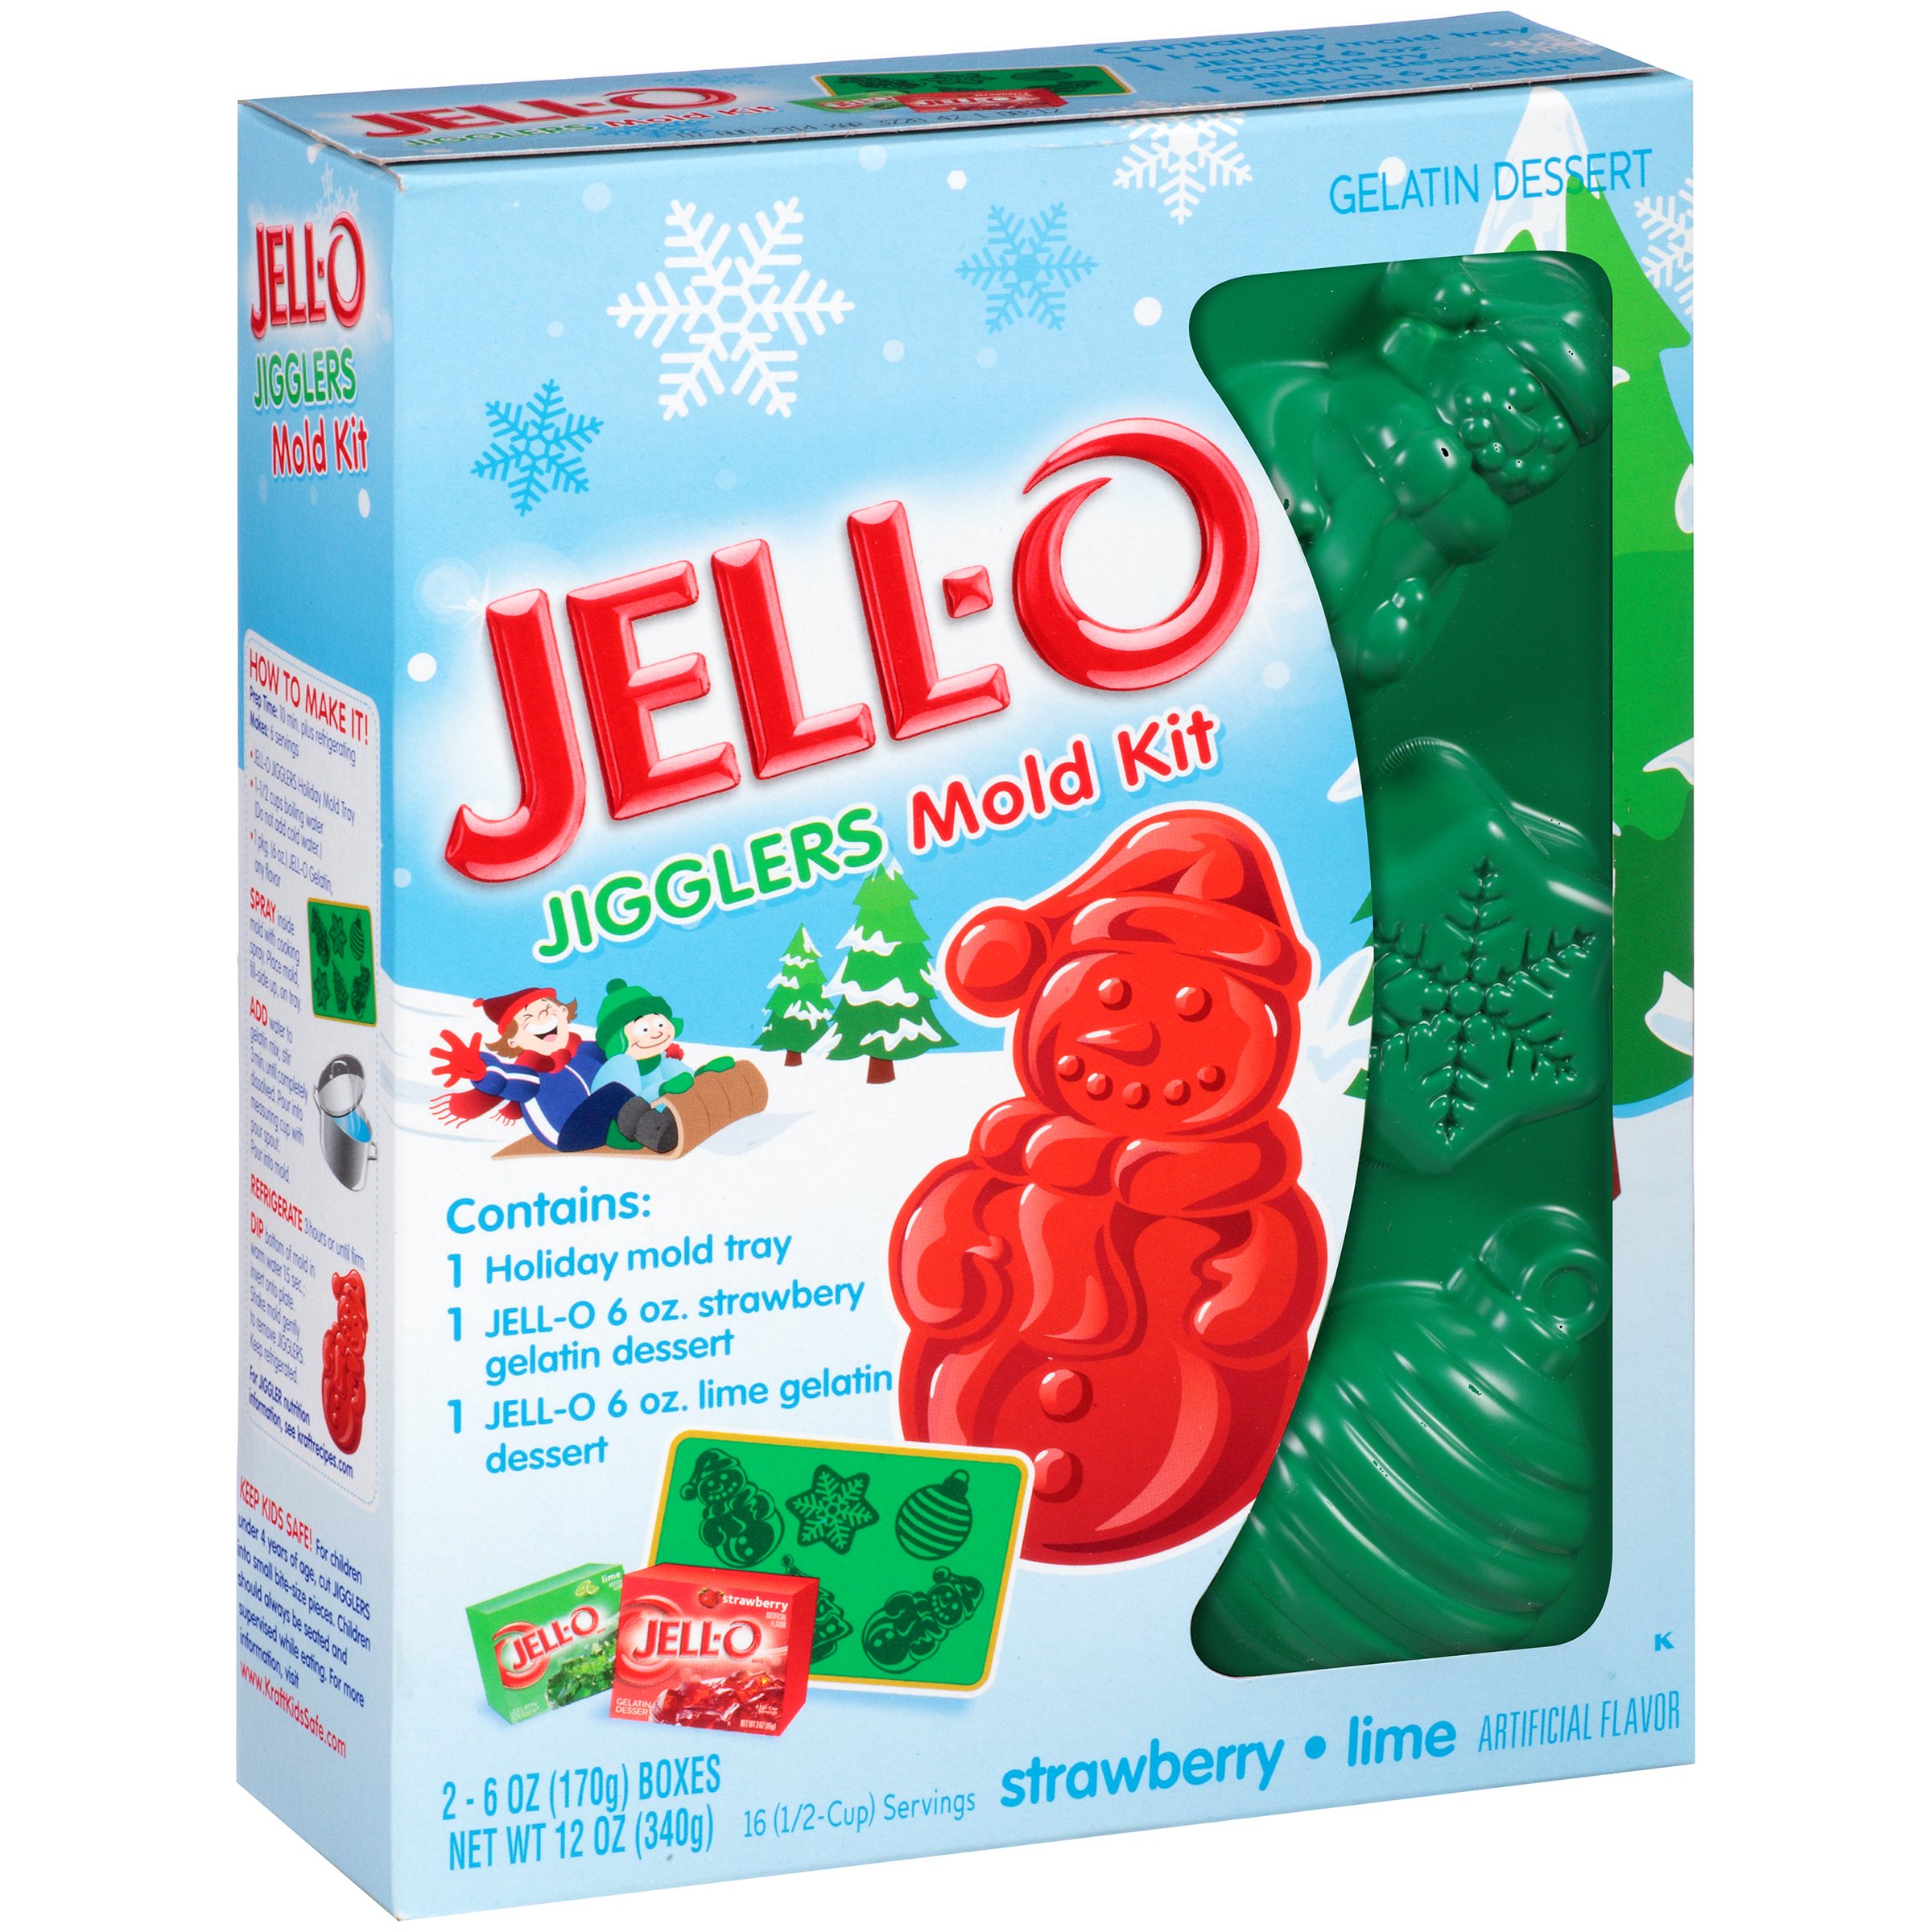 NEW Jello JIGGLERS Mold Kit CHRISTMAS Wreath Tree Reindeer Santa *Best by 2016* 